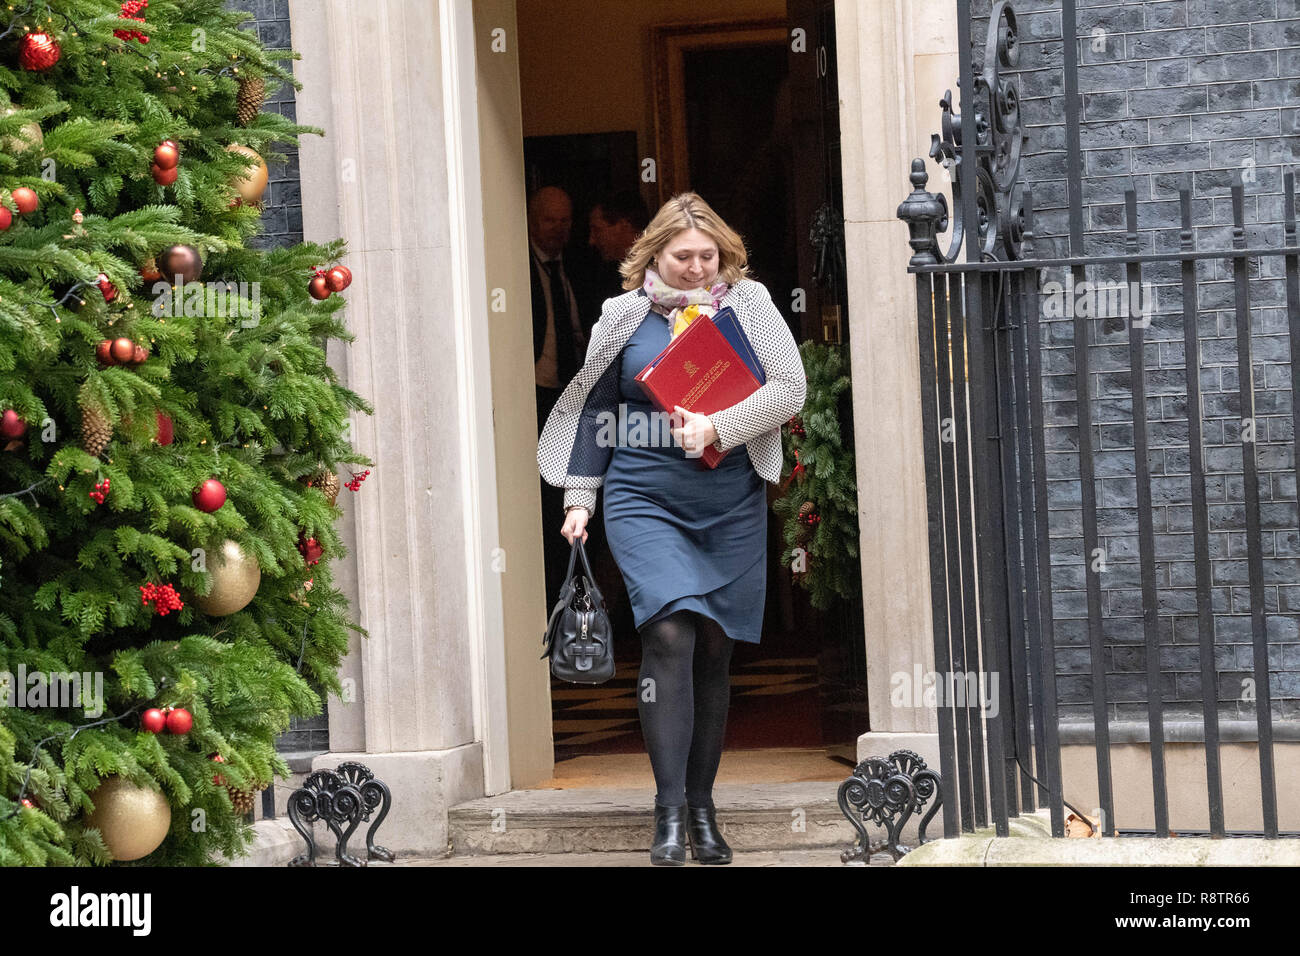 London, 18. Dezember 2018, Karen Bradley MP PC Nordirland Sekretär, hinterlässt eine Kabinettssitzung am 10 Downing Street, London Credit Ian Davidson/Alamy leben Nachrichten Stockfoto